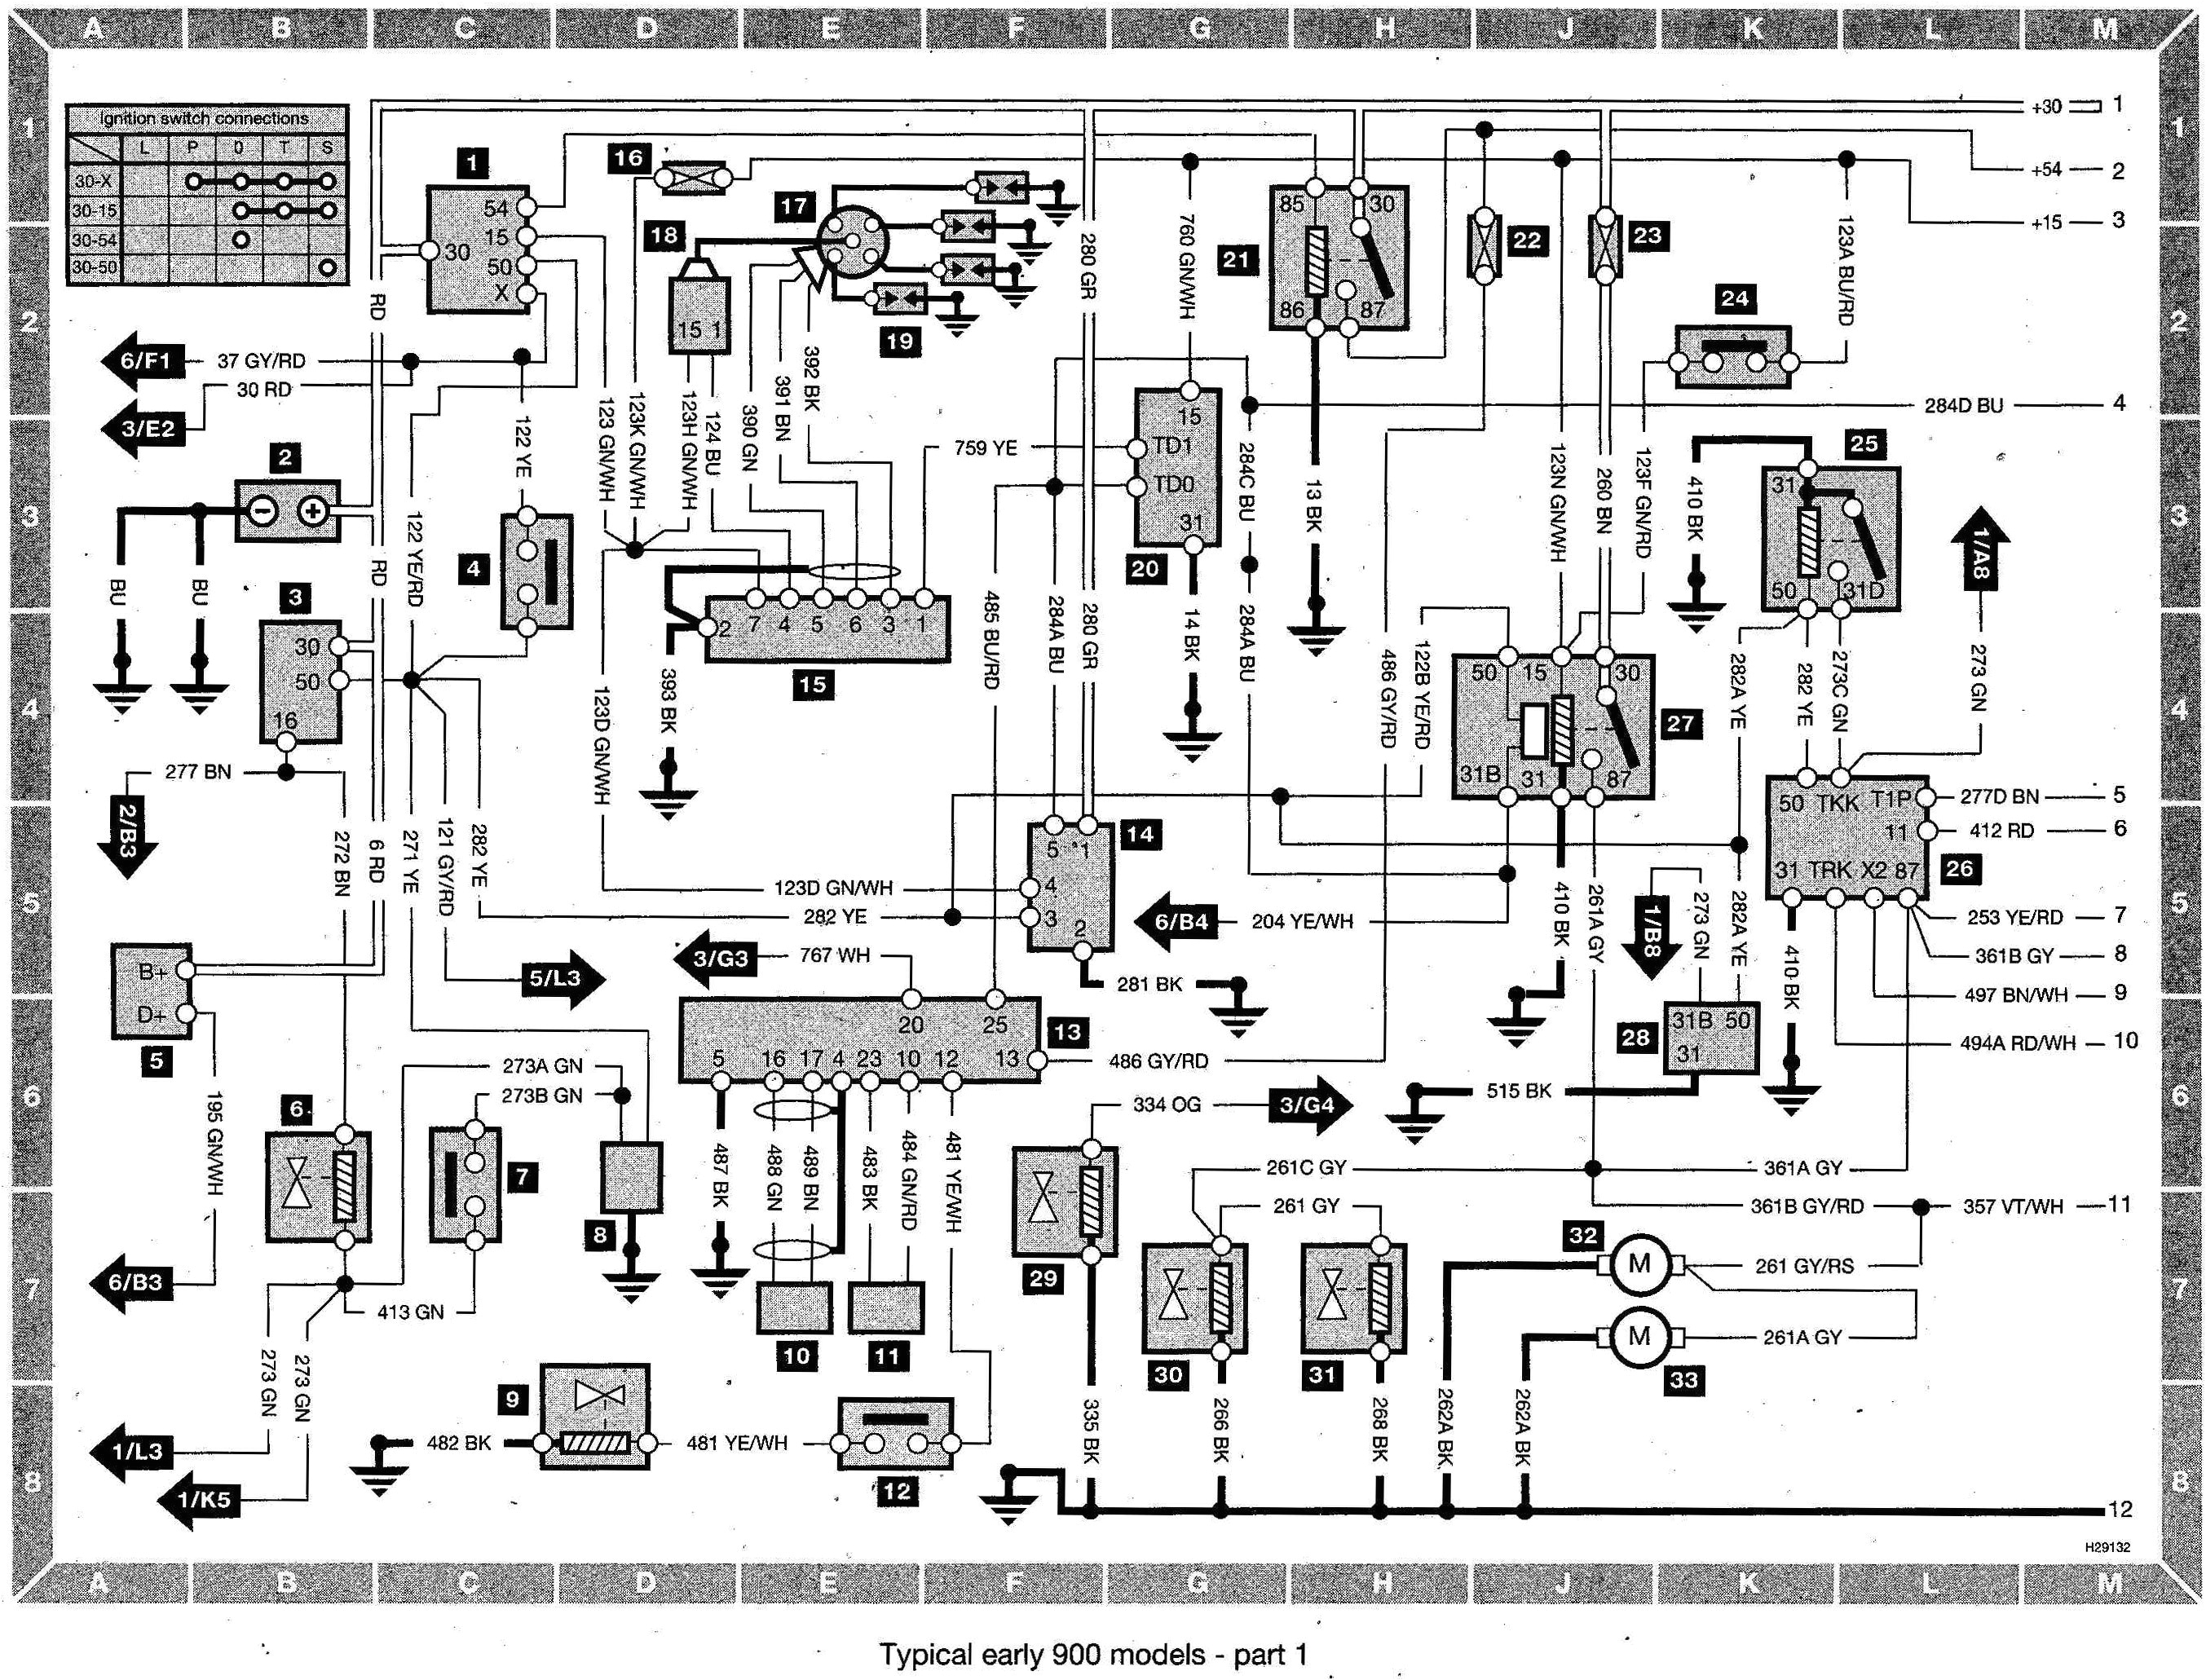 saab 900 wiring diagram pdf example of audi a4 1 9 tdi wiring diagram new saab 900 wiring diagram pdf of saab 900 wiring diagram pdf png